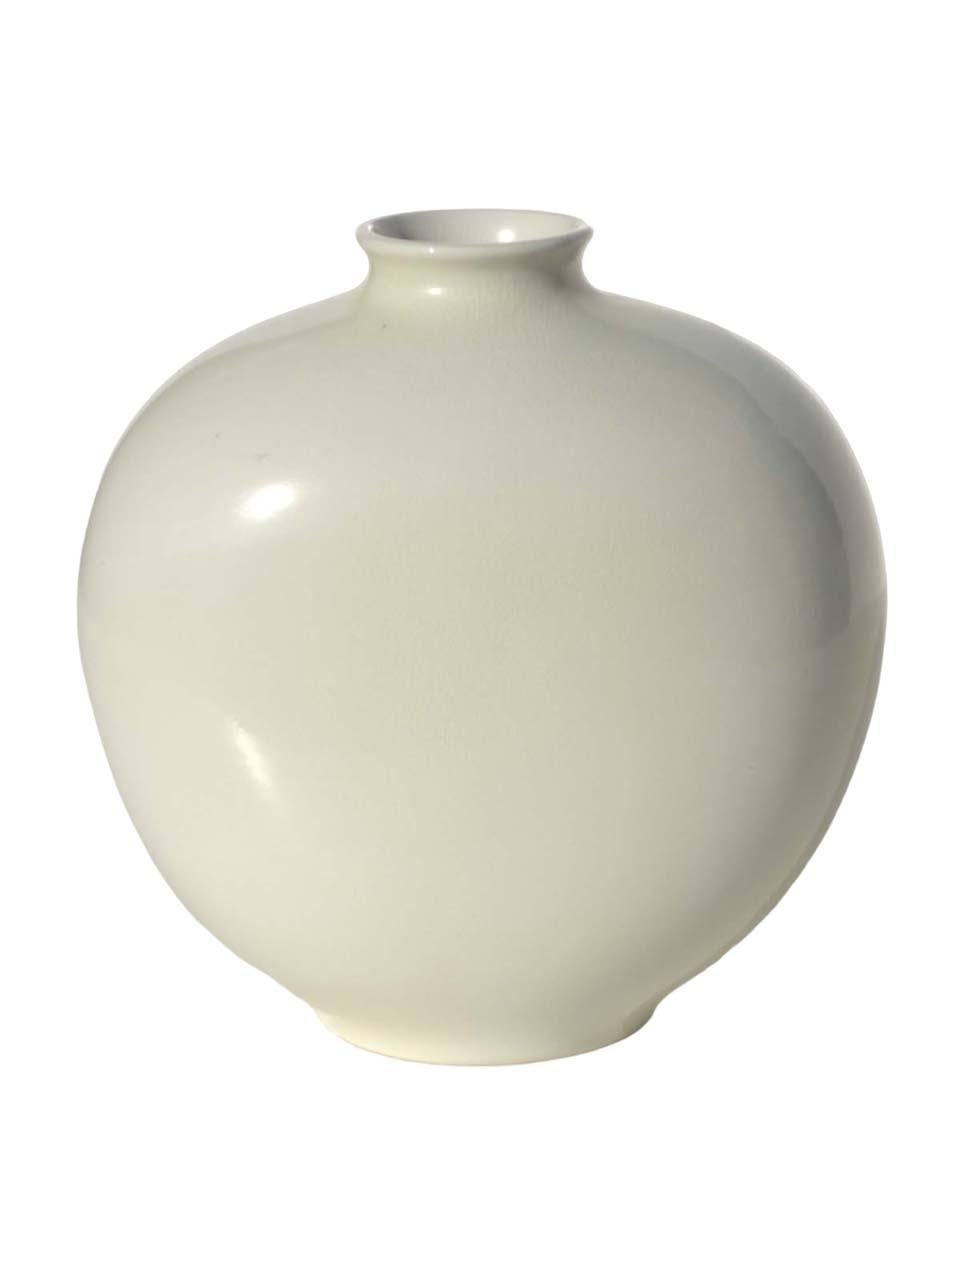 Giovanni Gariboldi
Ginori _ San Cristoforo
1940s

White ceramic vase
Decoration 